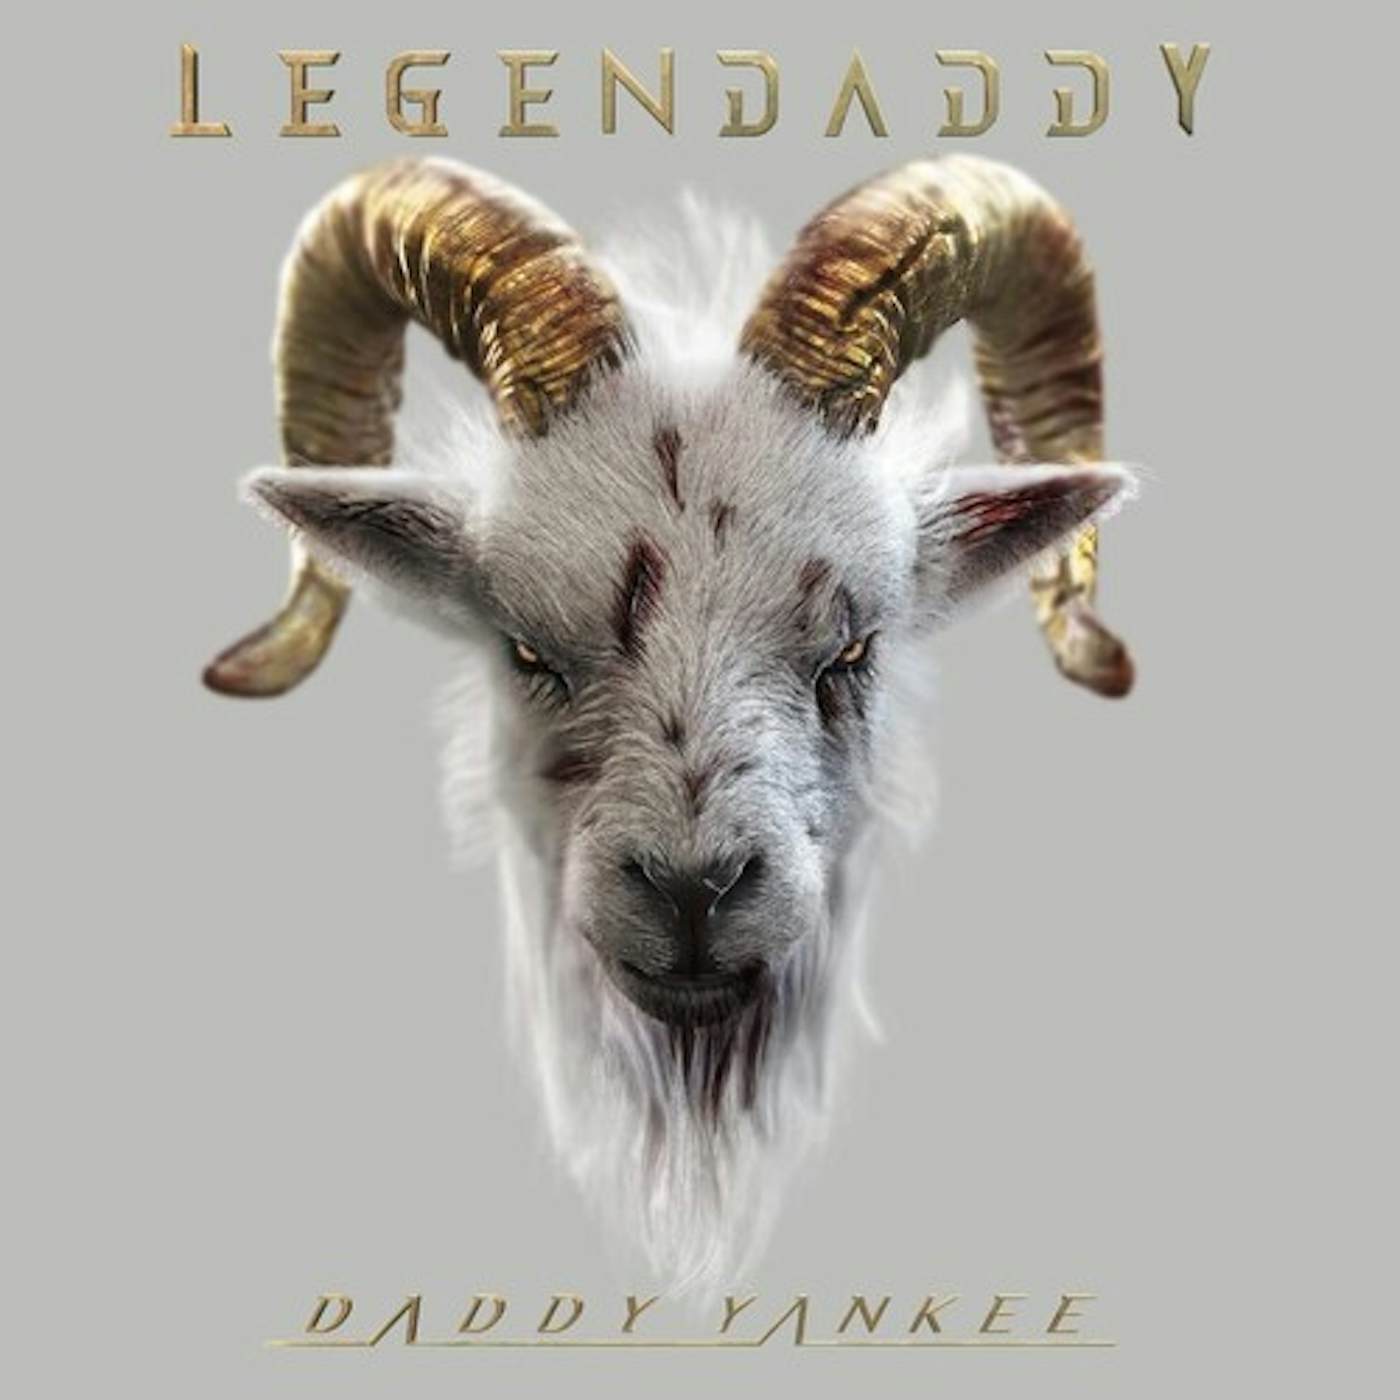 Daddy Yankee Legendaddy Vinyl Record